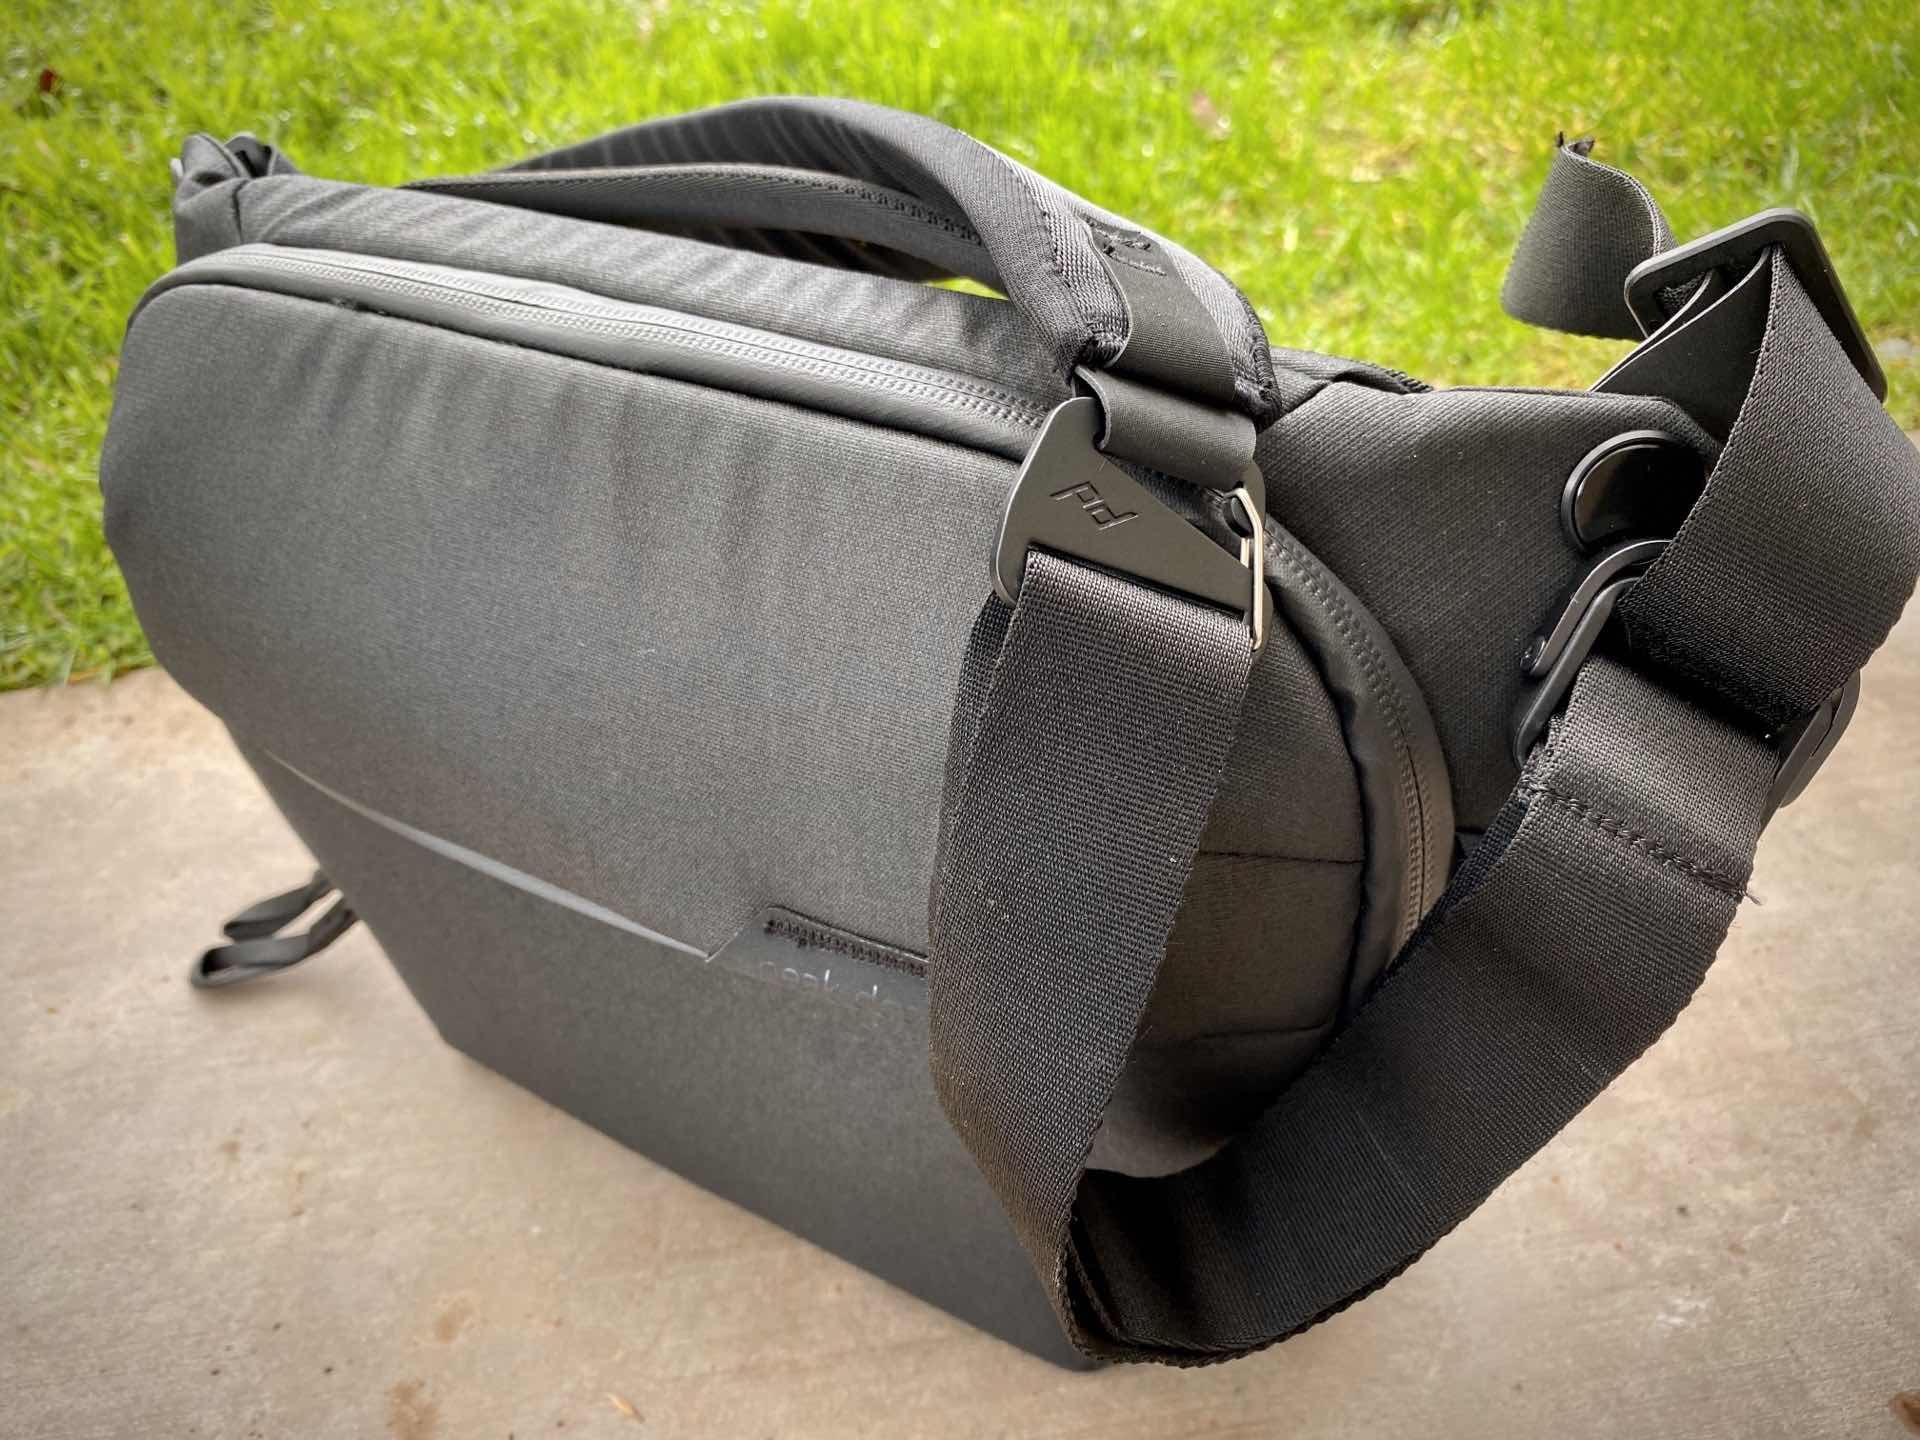 Peak Design Everyday Backpack v2 review: A backpack you'll really